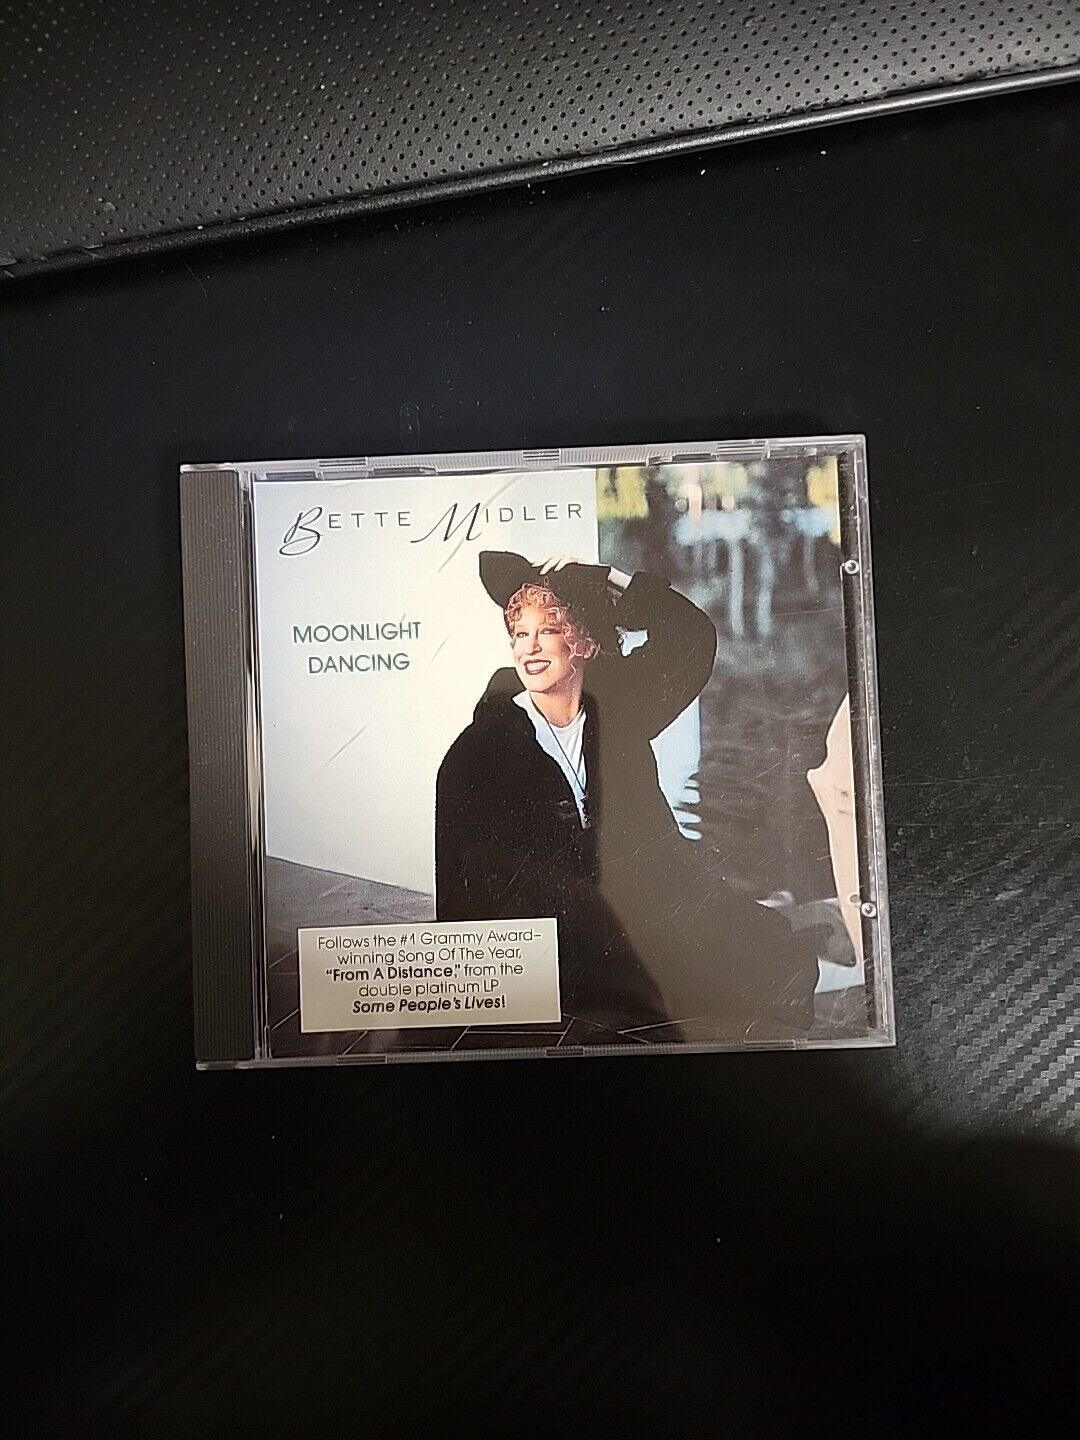 Bette Midler Moonlight Dancing Single (CD)